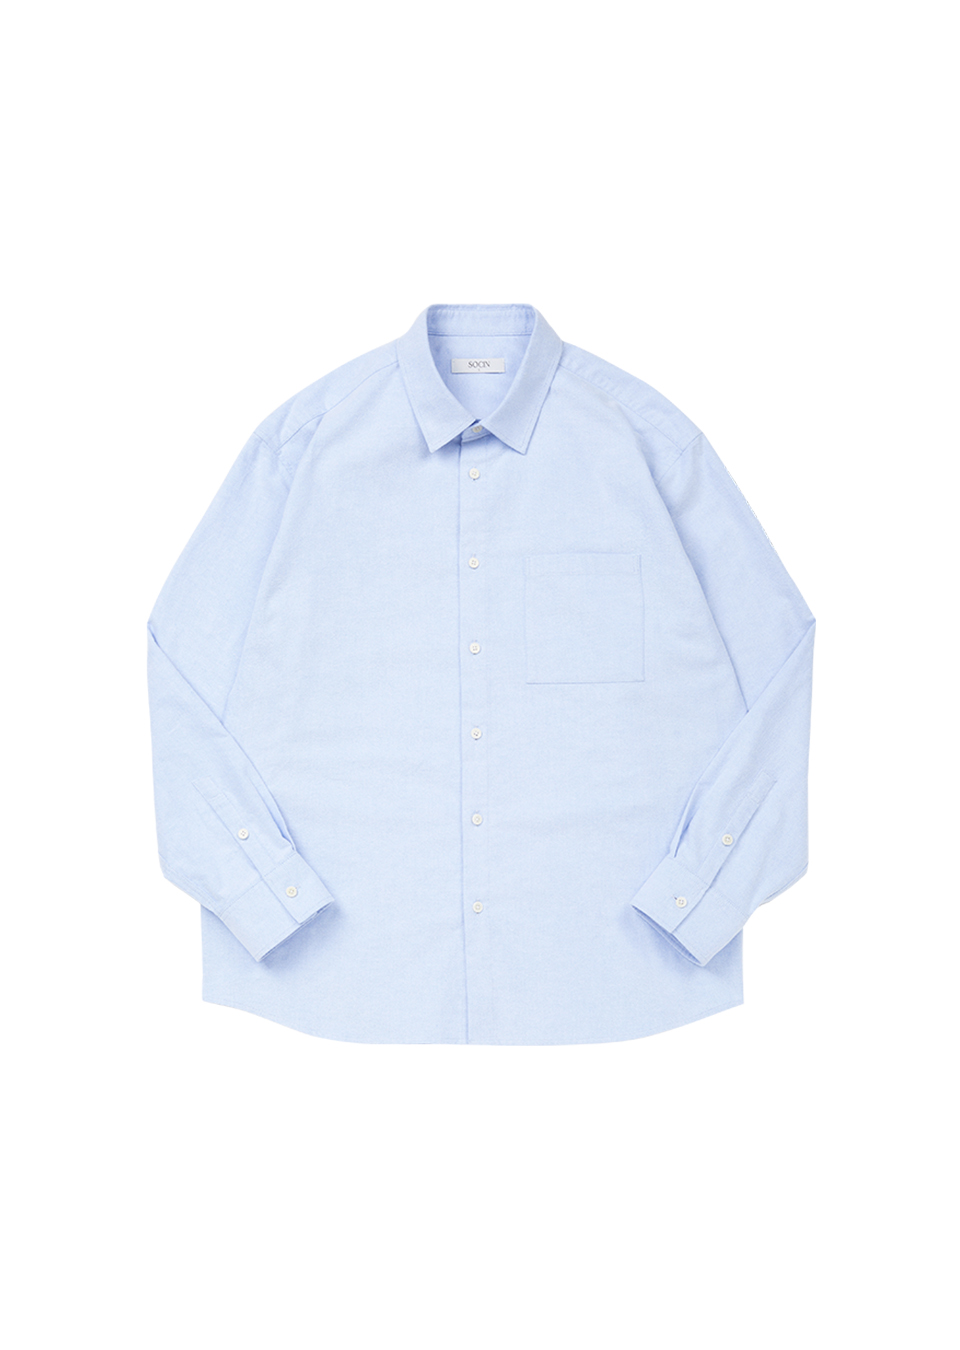 classic oxford shirt (BLUE)